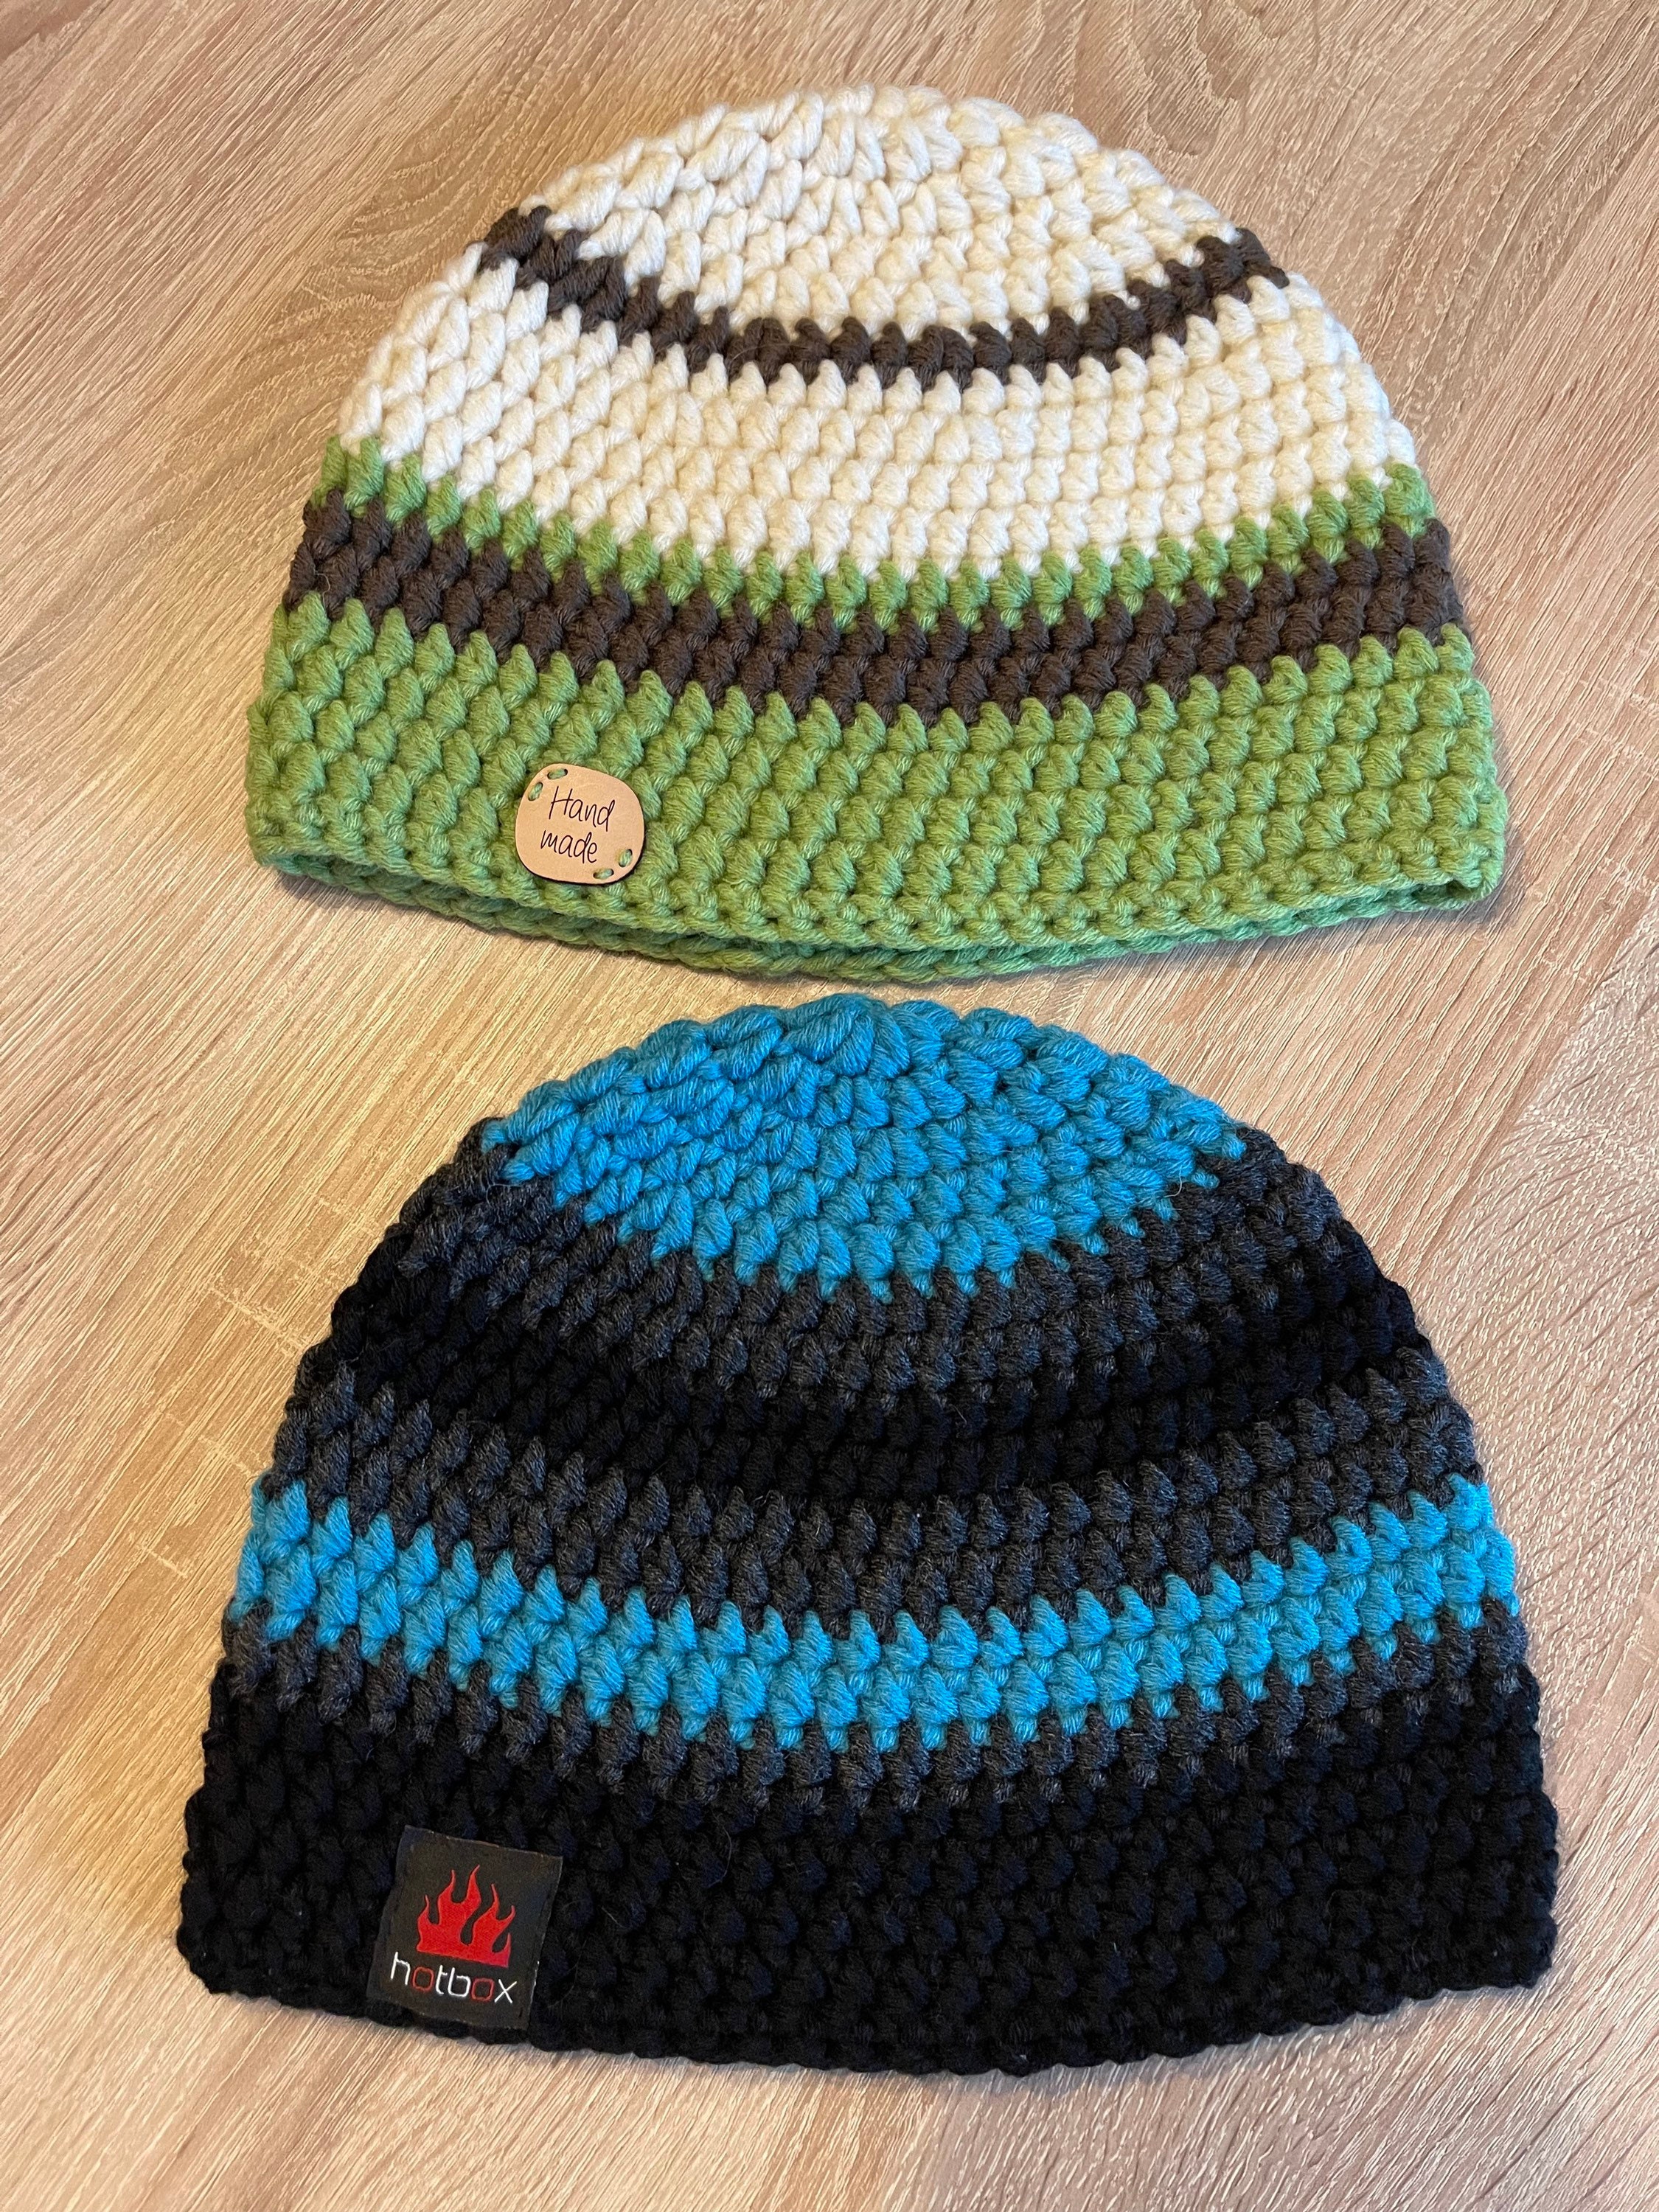 Crochet Sports Hat -  Ireland